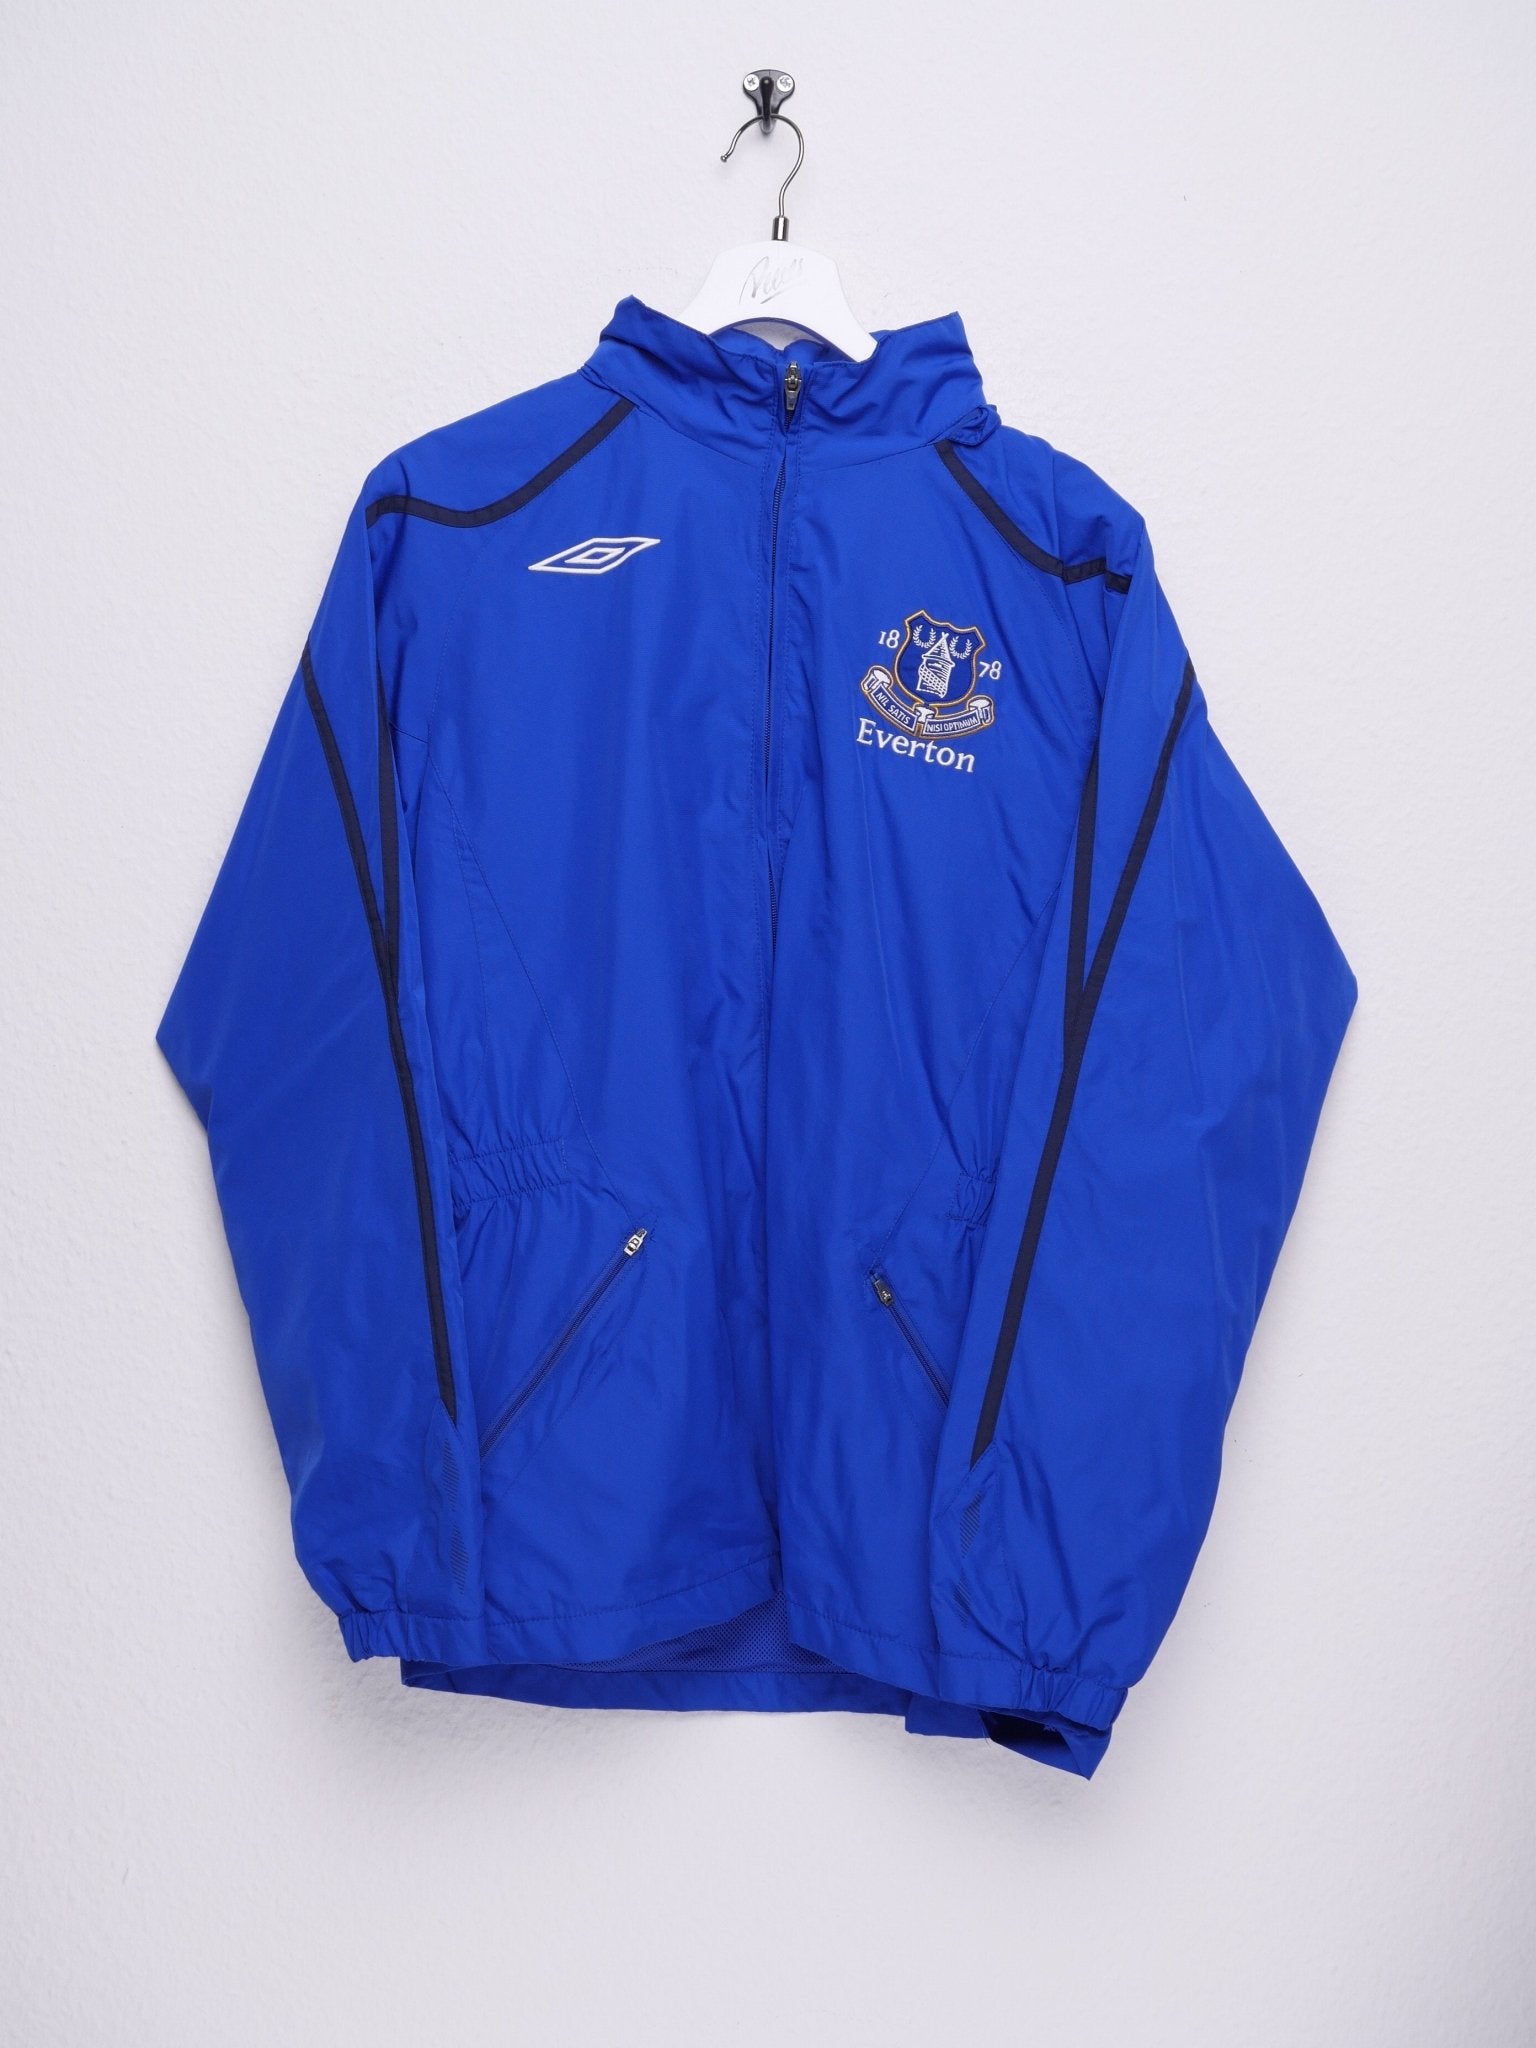 Umbro '1887 Everton' embroidered Logo blue Track Jacket - Peeces